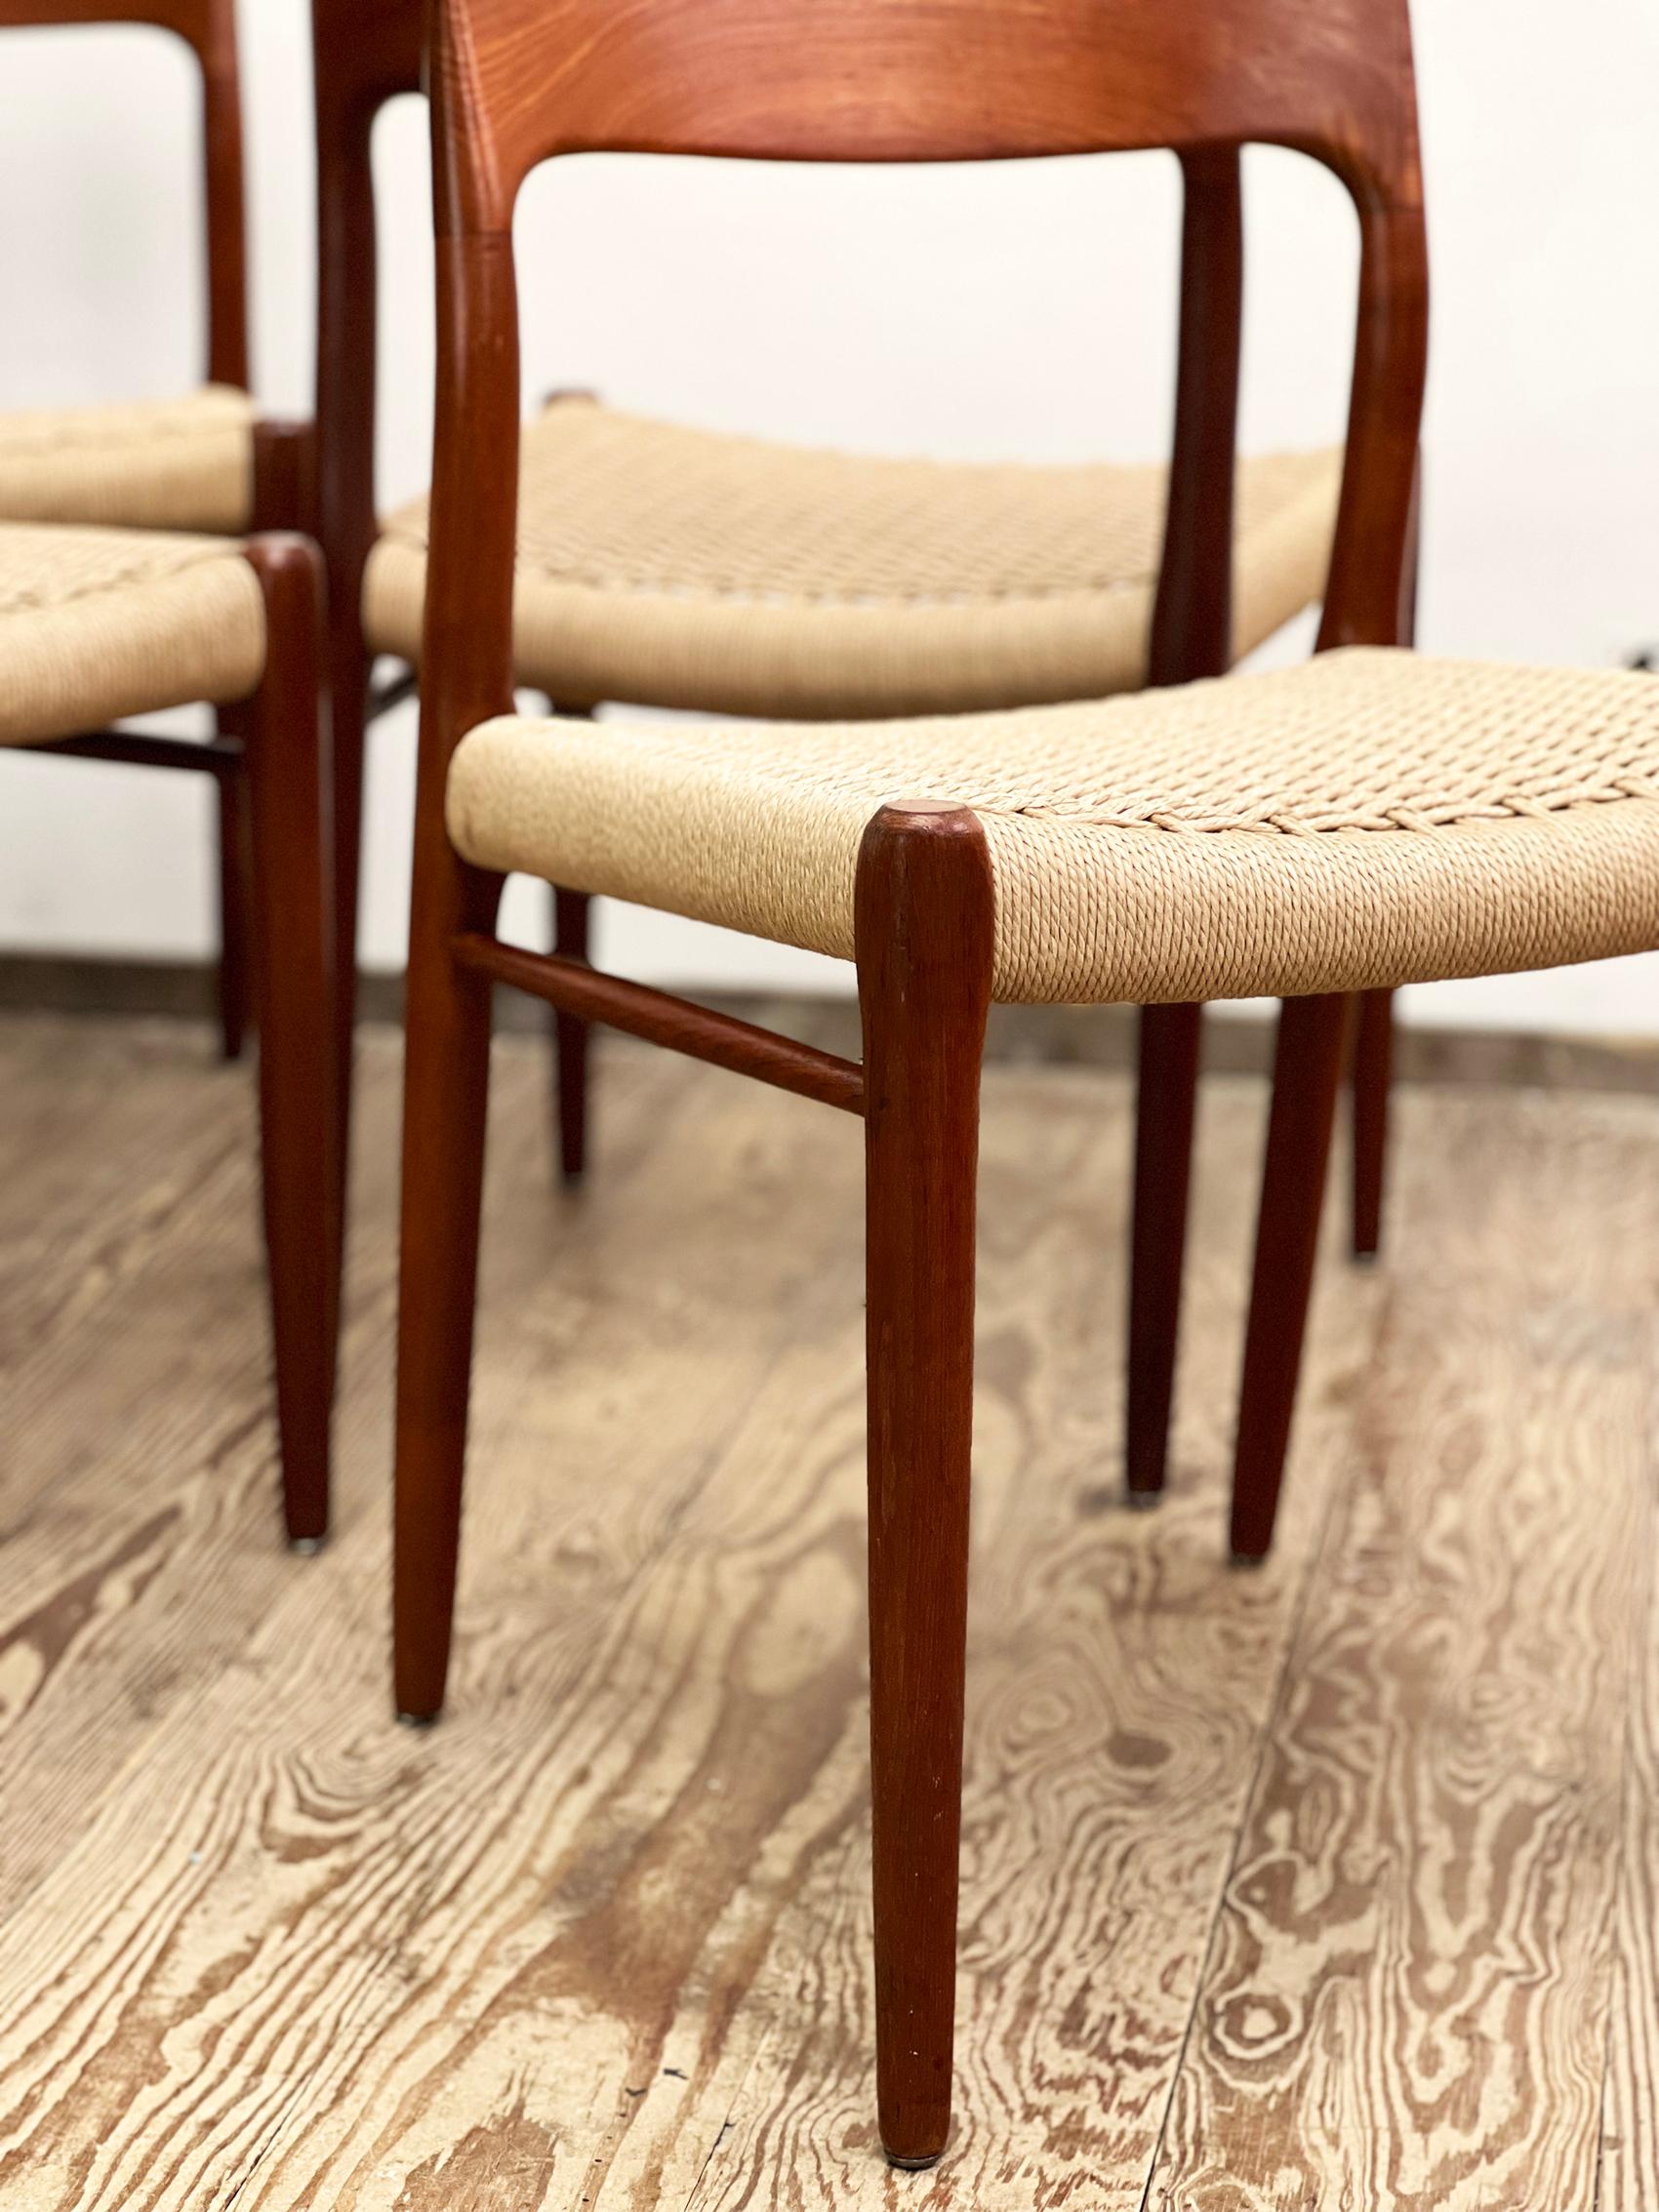 4 Midcentury Dining Chairs #75 in Teak, Danish Design, Niels Møller, J.L. Moller 2